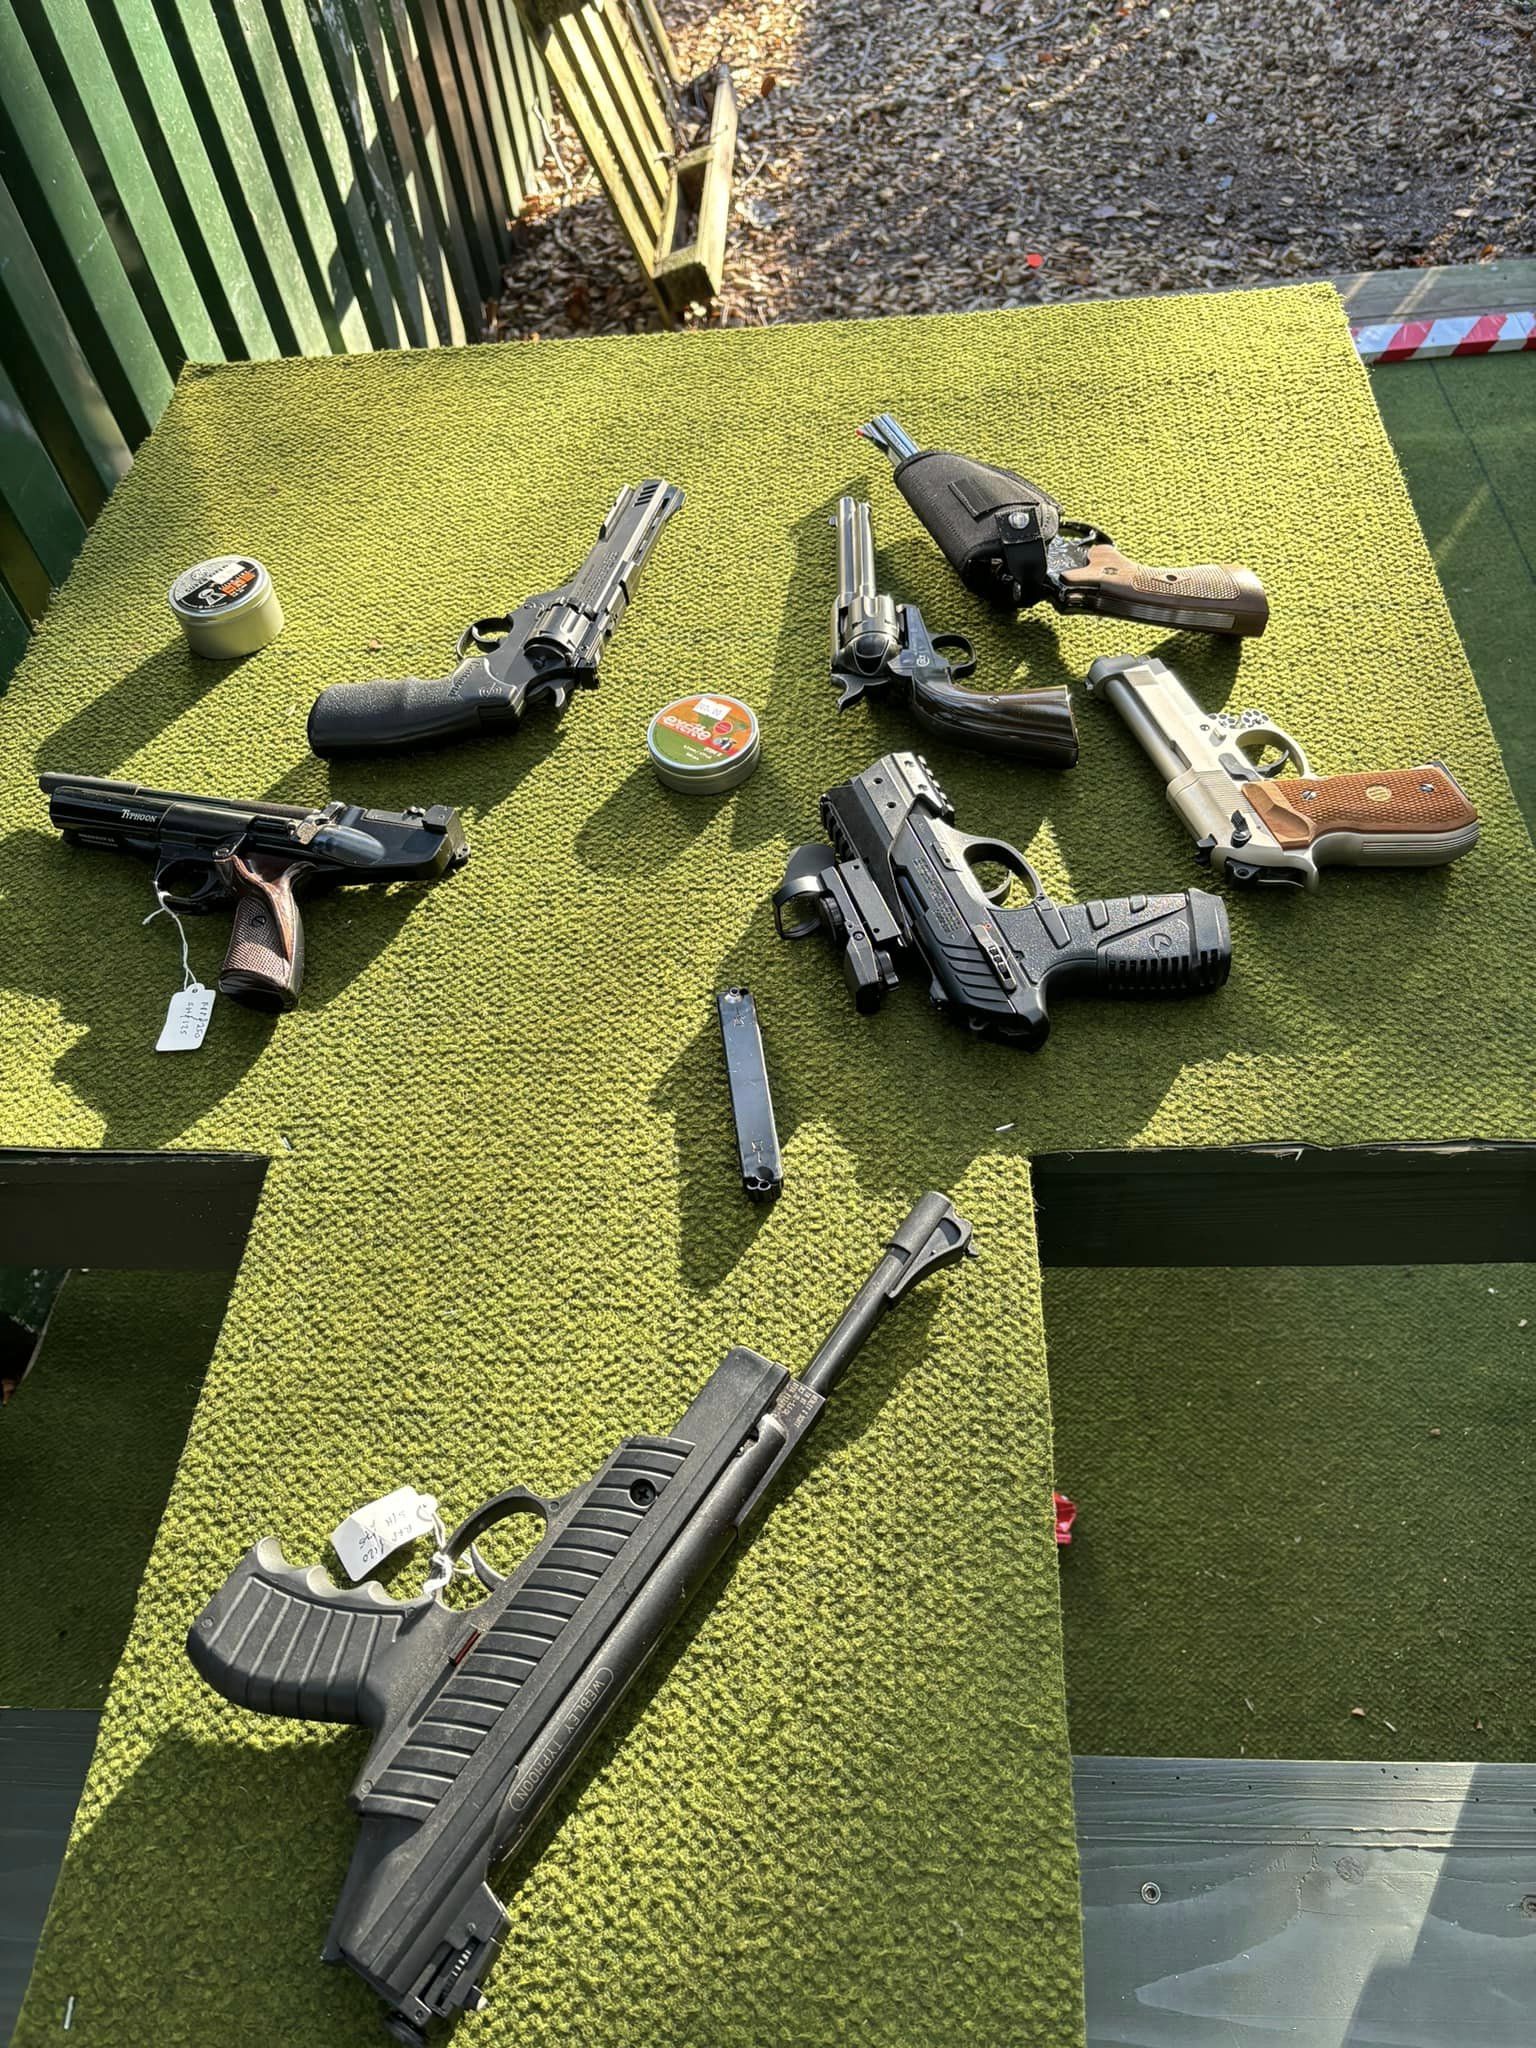 pistols at the range 